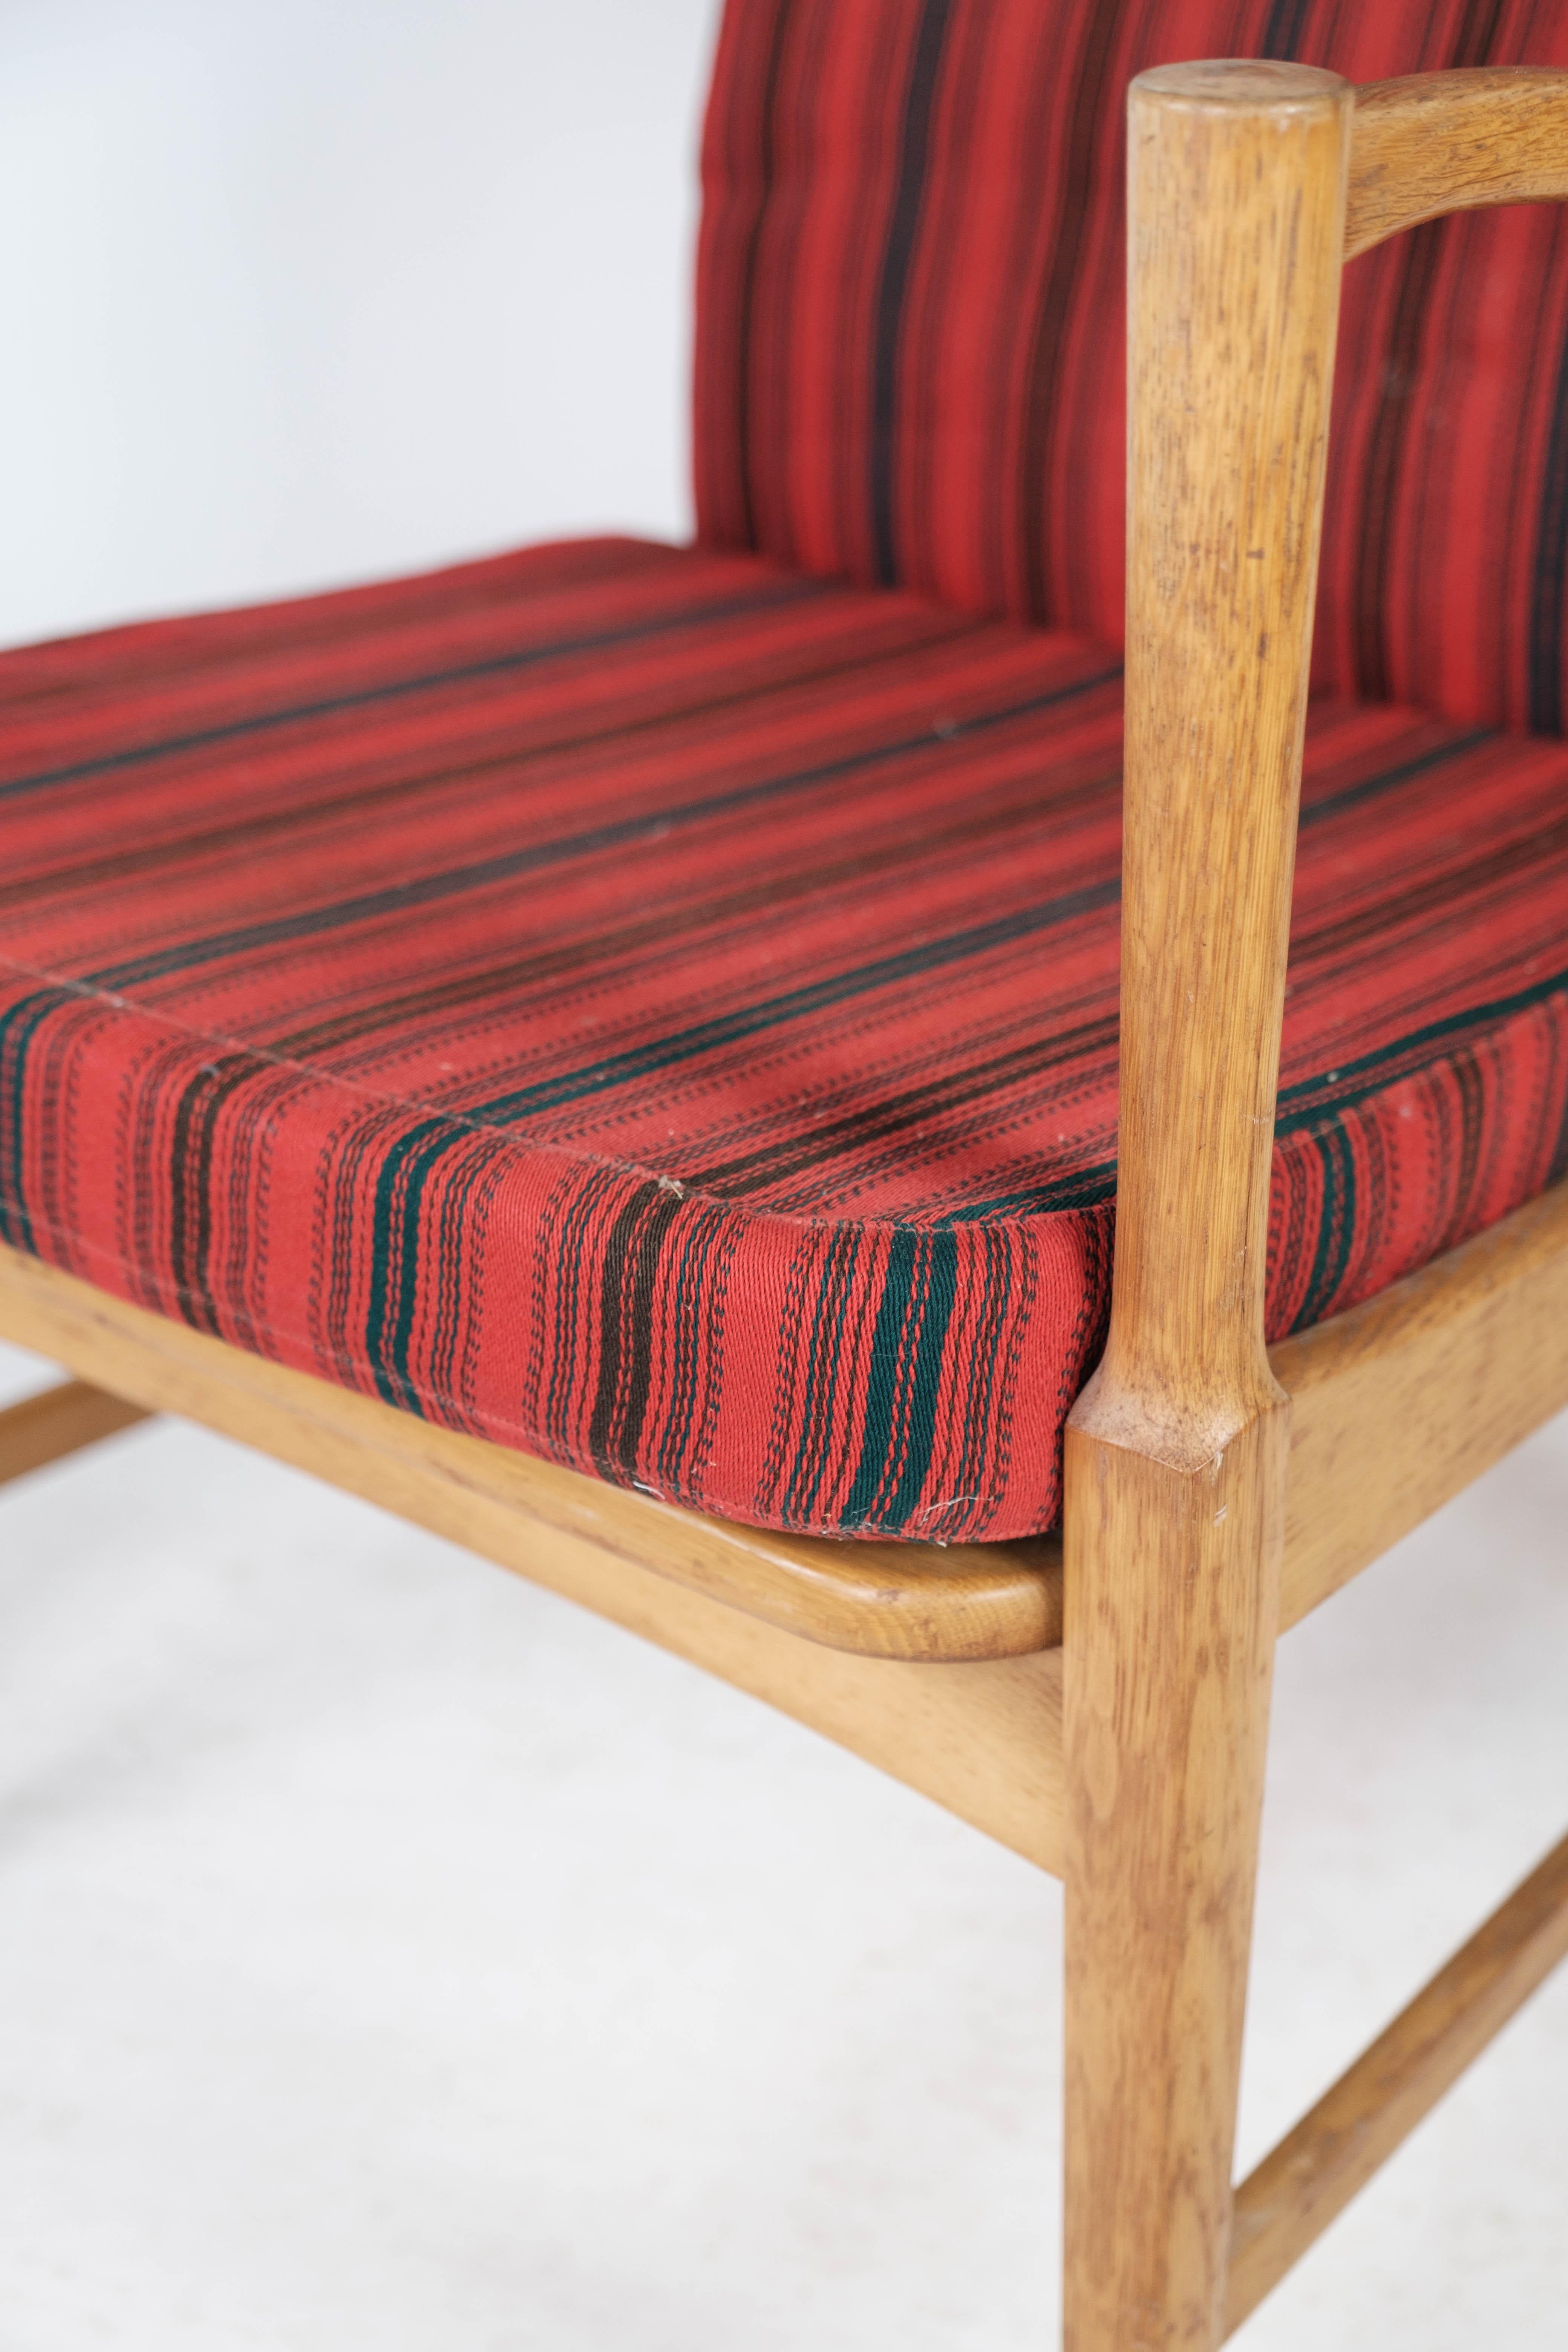 swedish chair design